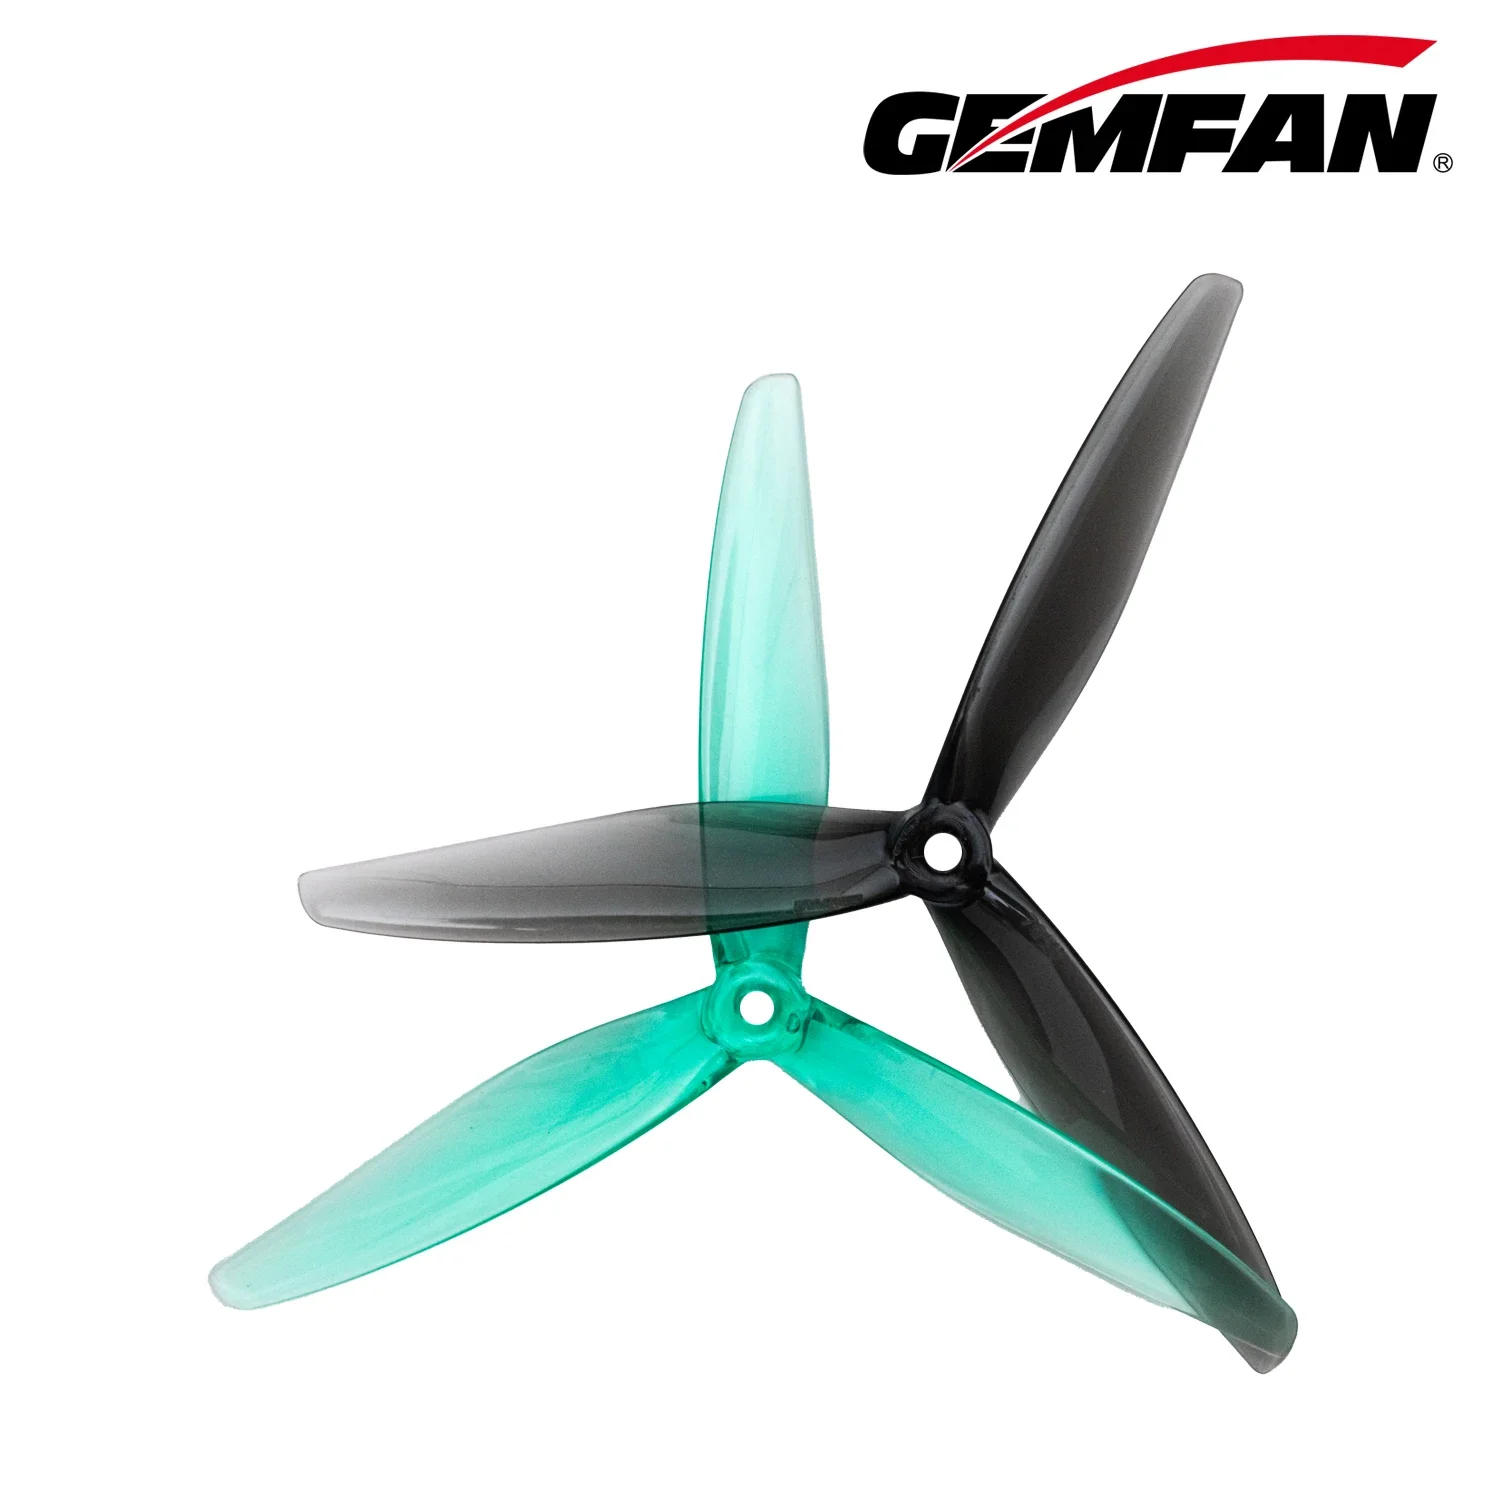 Gemfan Hurricane 7050 7x5 3-blade PC propeller